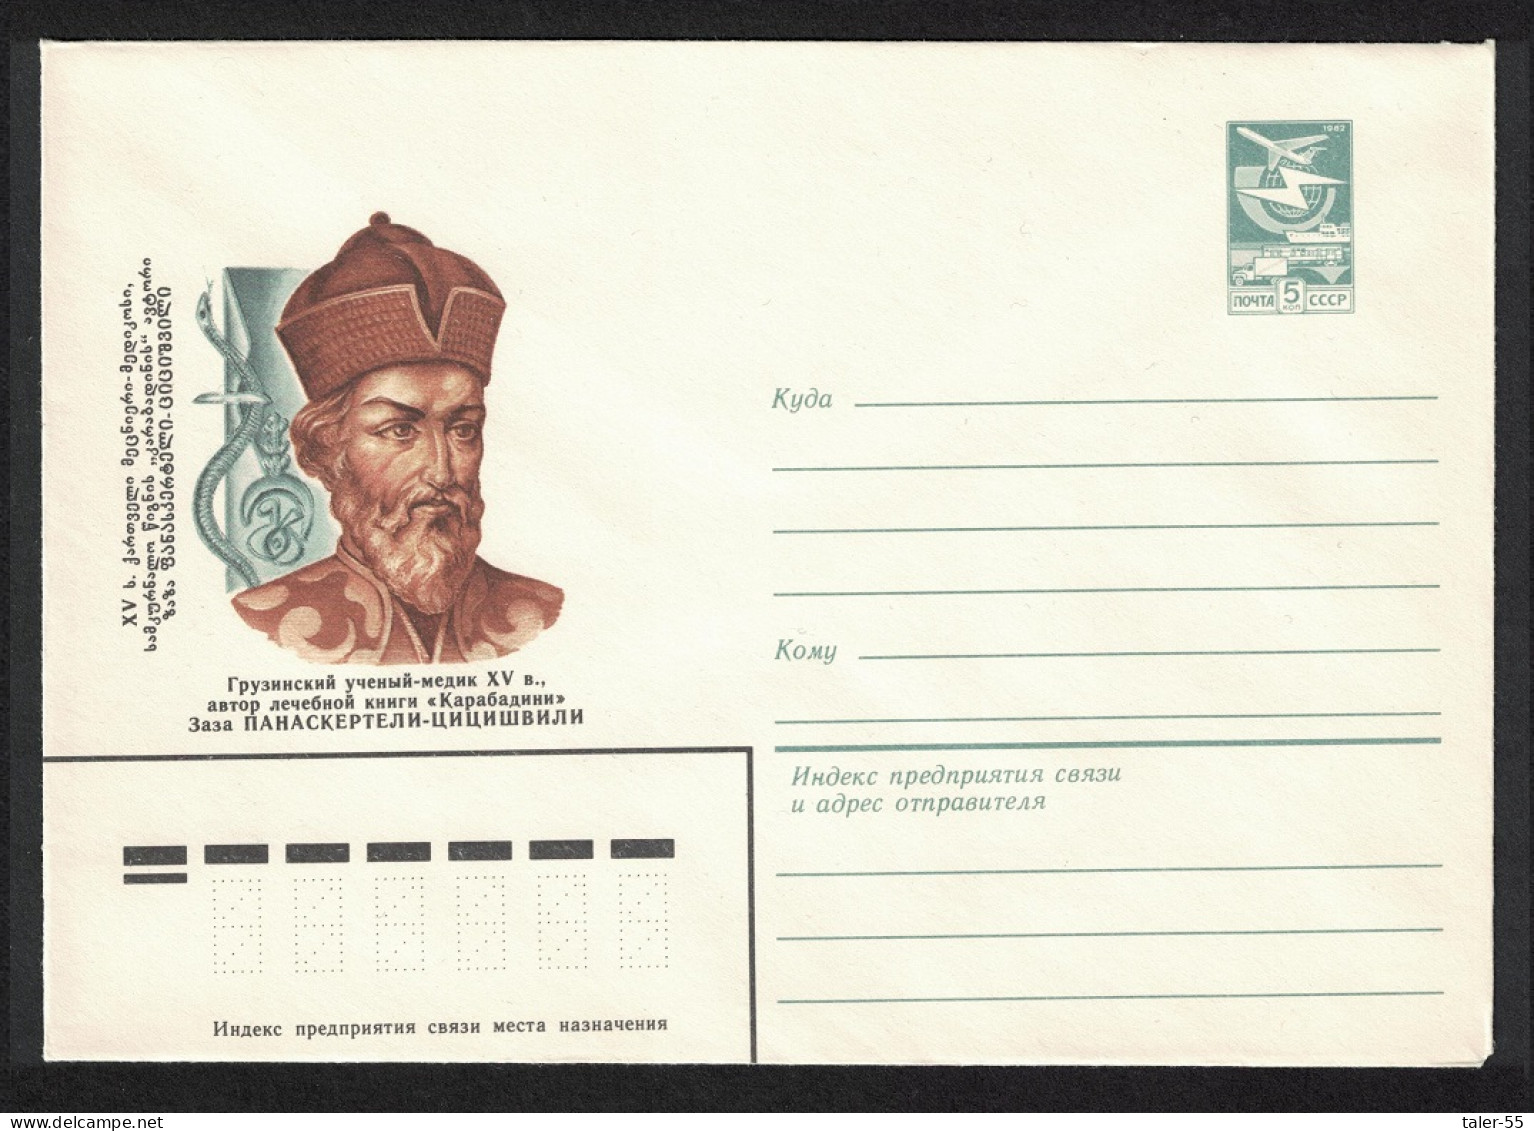 USSR Zaza Panaskerteli Great Georgian Healer Pre-paid Envelope 1980 - Used Stamps